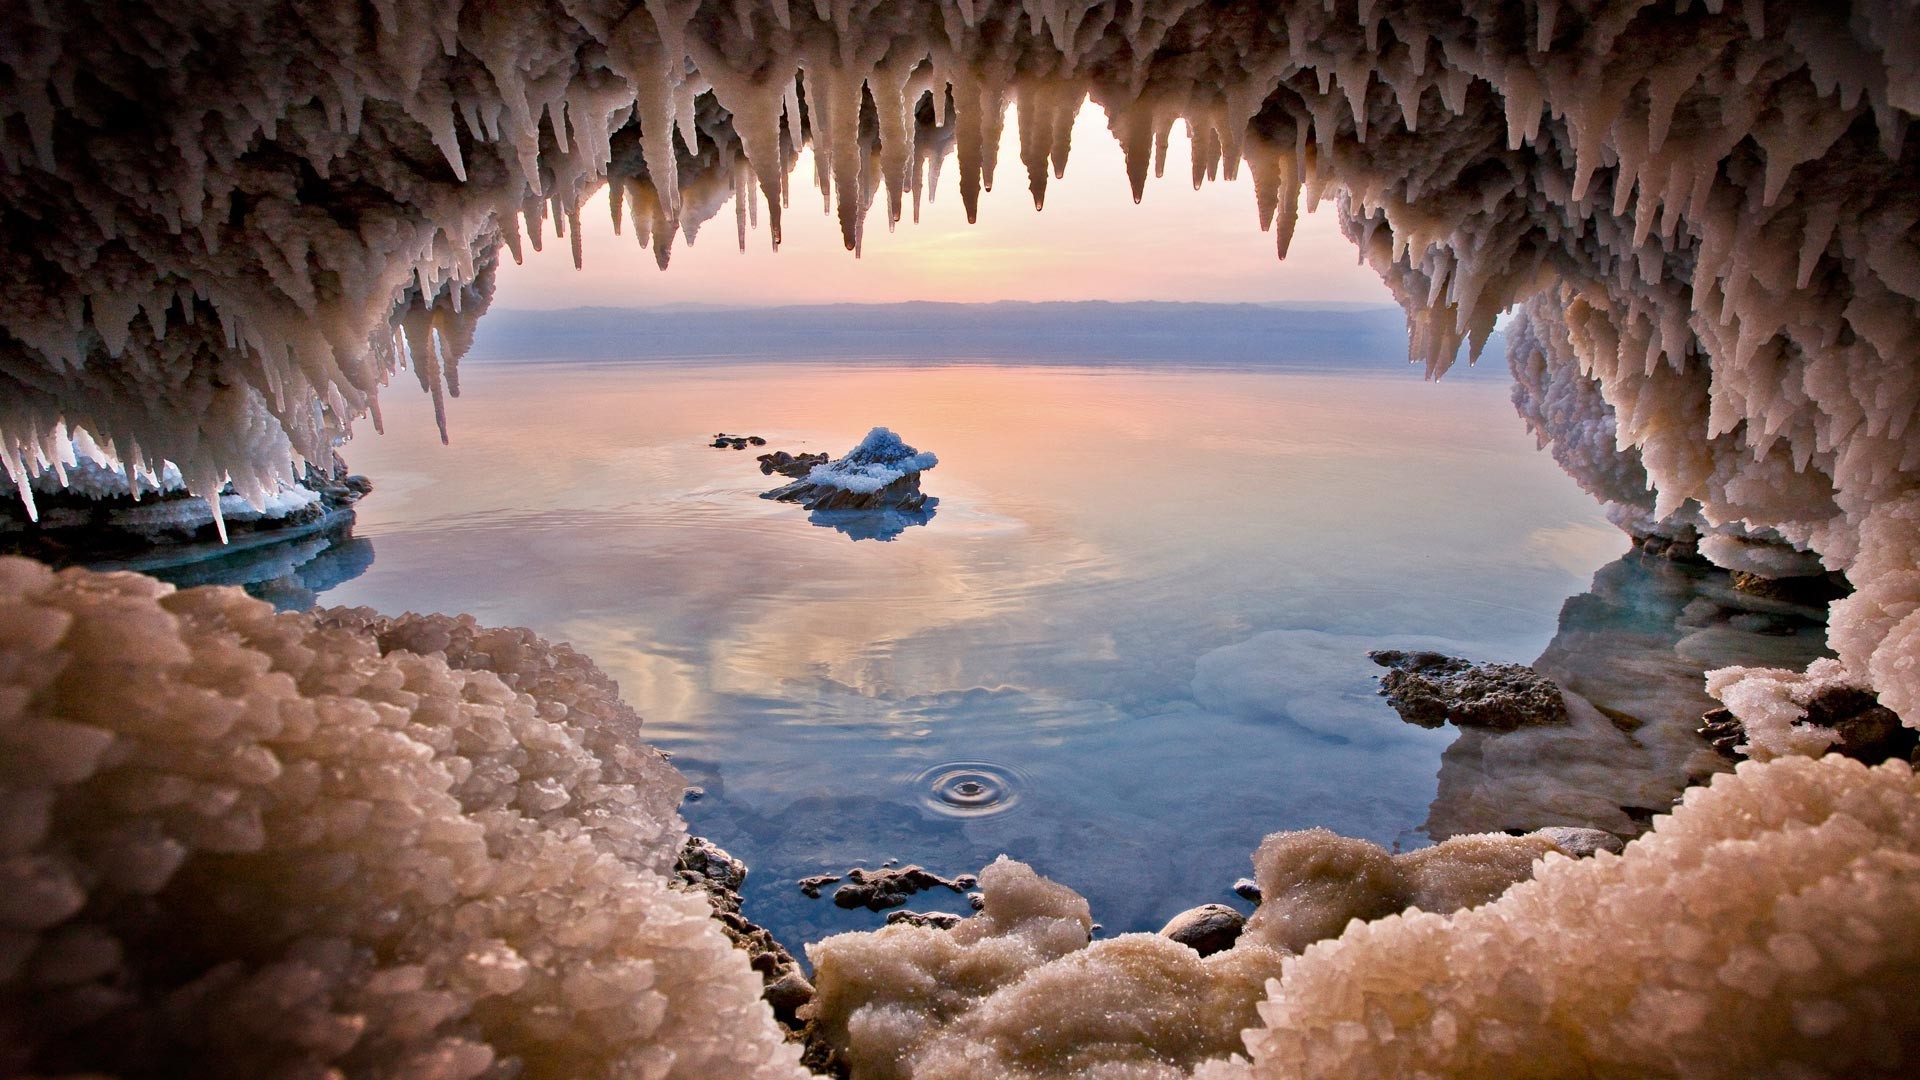 Grotte en mer Morte, Jordanie